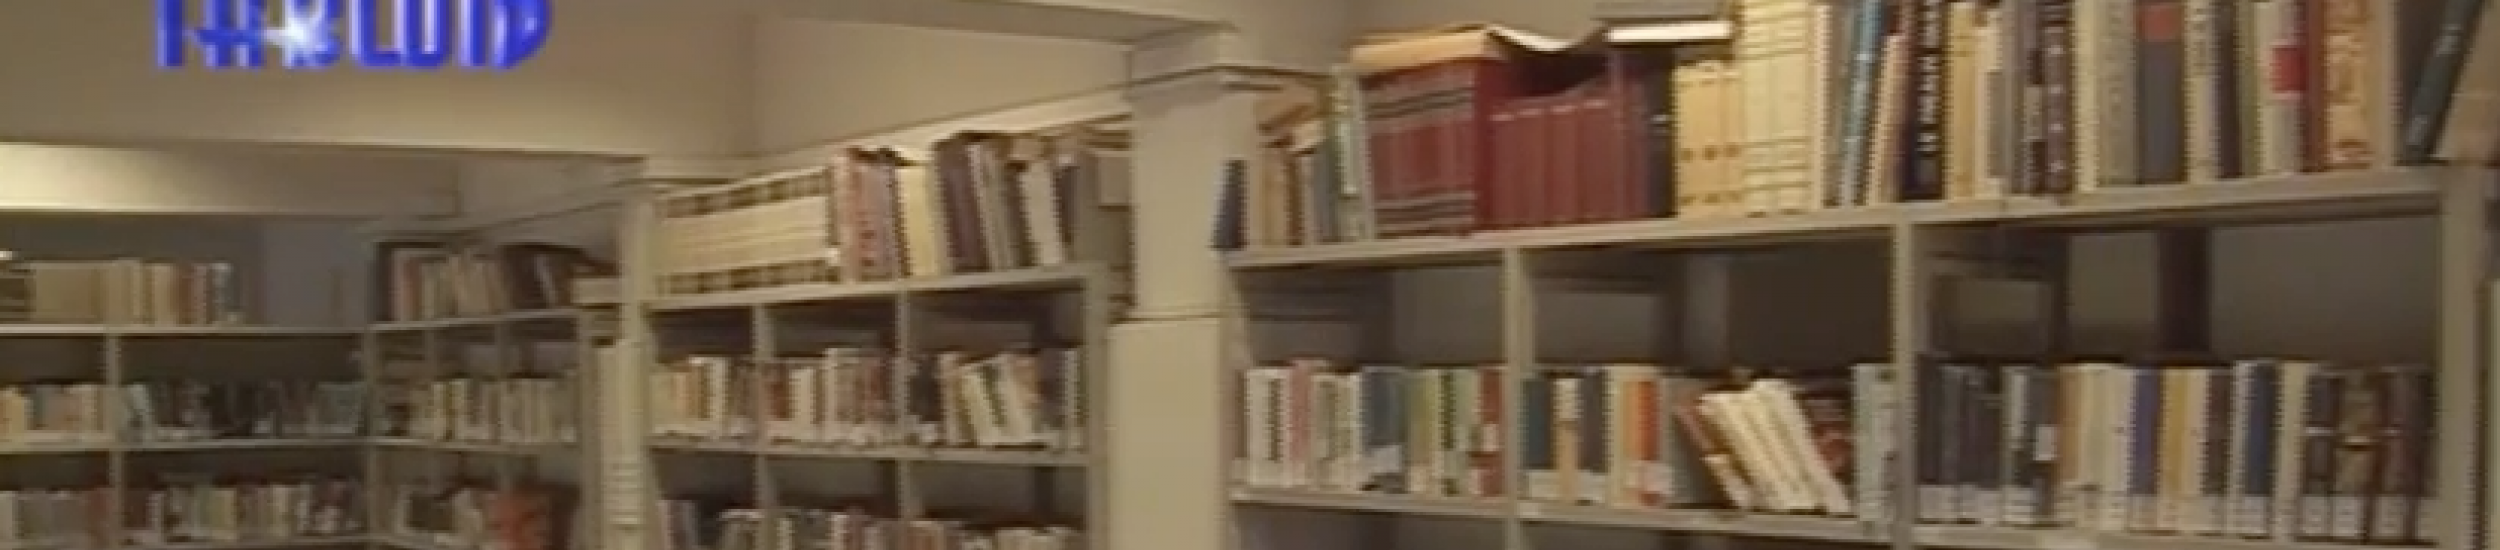 Tabloid-Biblioteche comunali-CSM